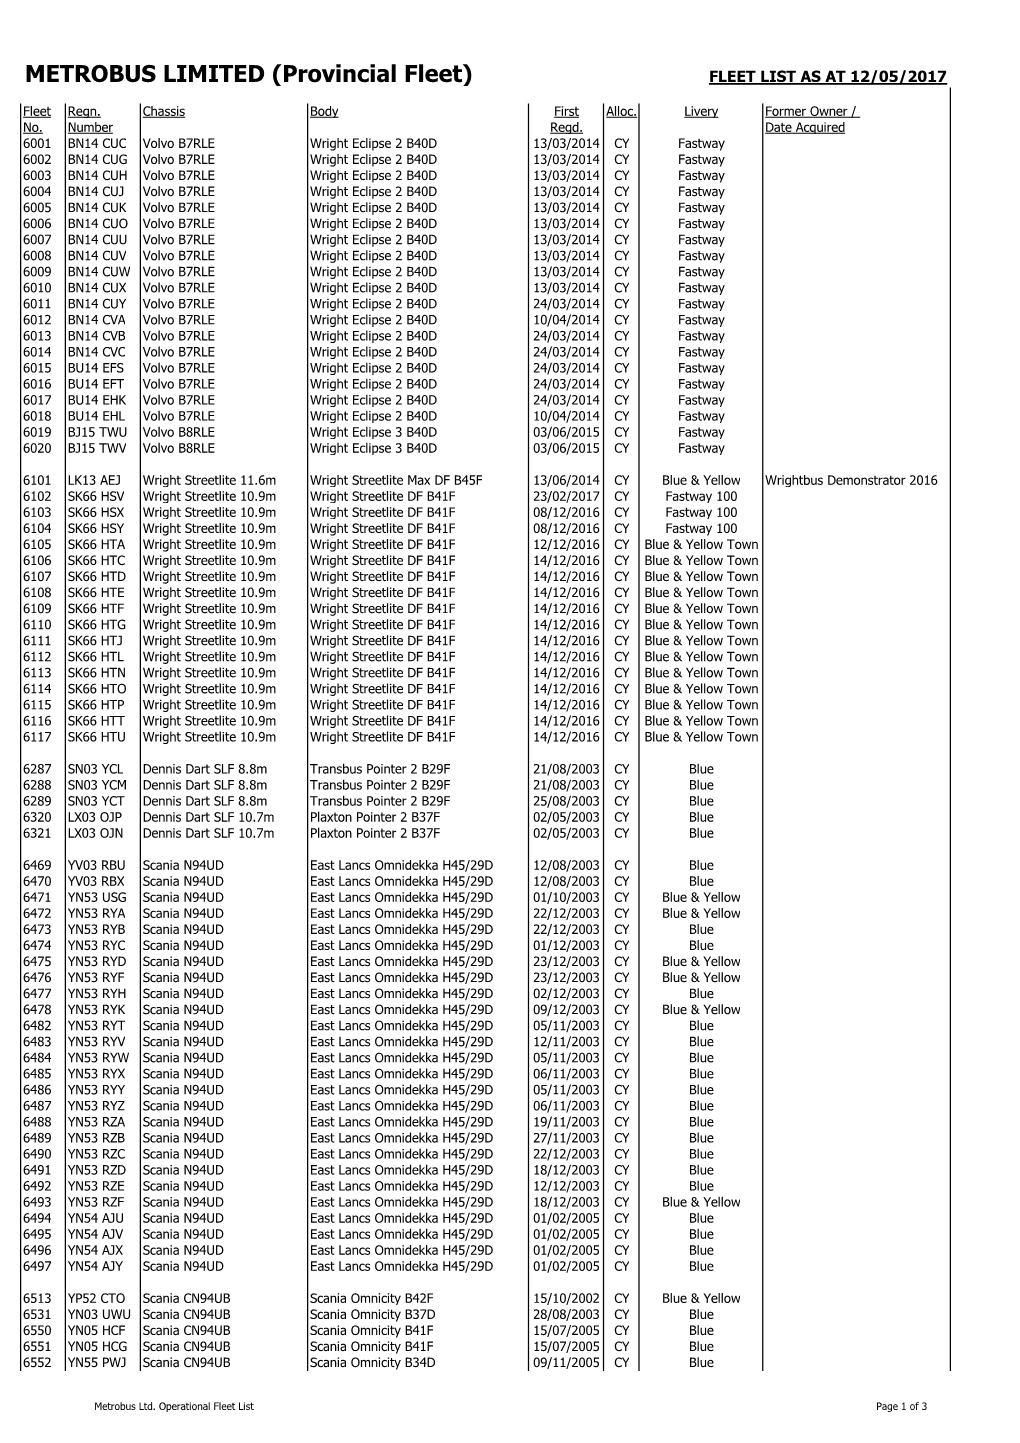 METROBUS LIMITED (Provincial Fleet) FLEET LIST AS at 12/05/2017